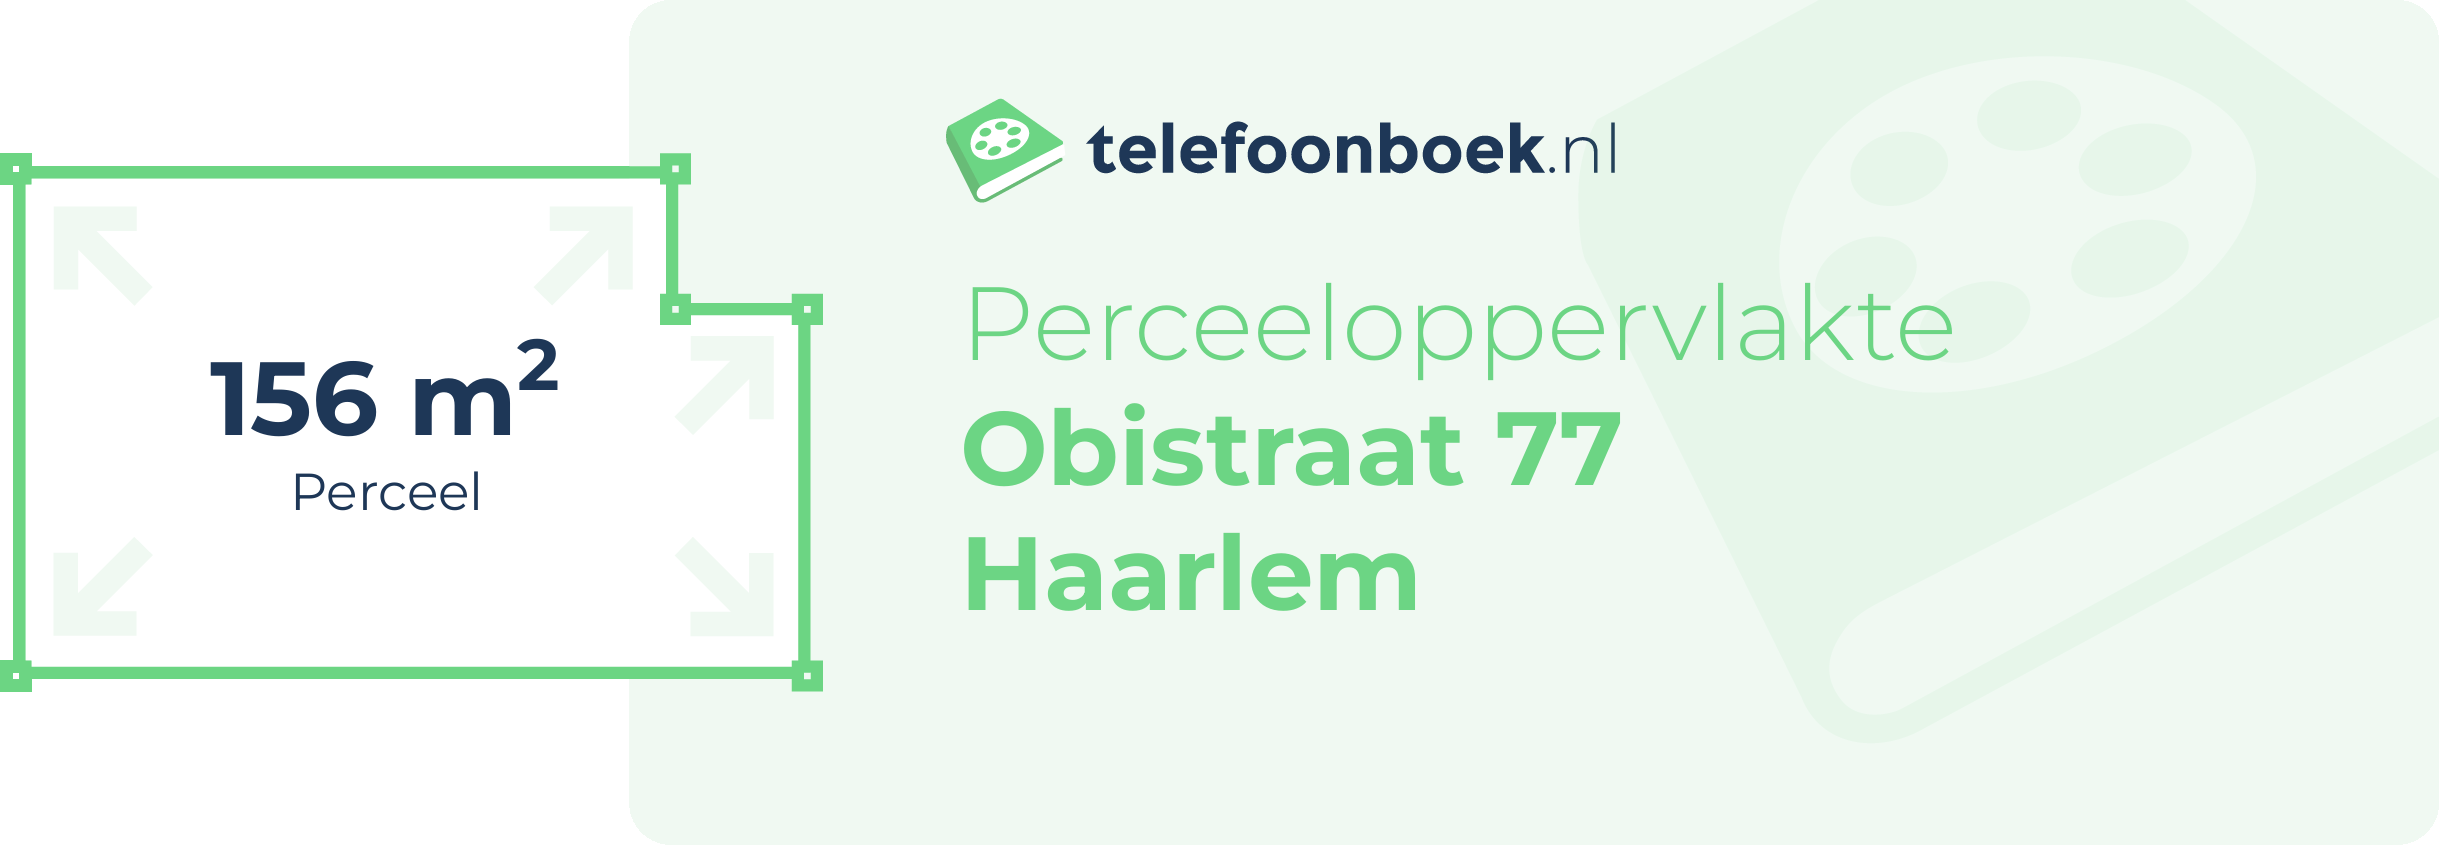 Perceeloppervlakte Obistraat 77 Haarlem